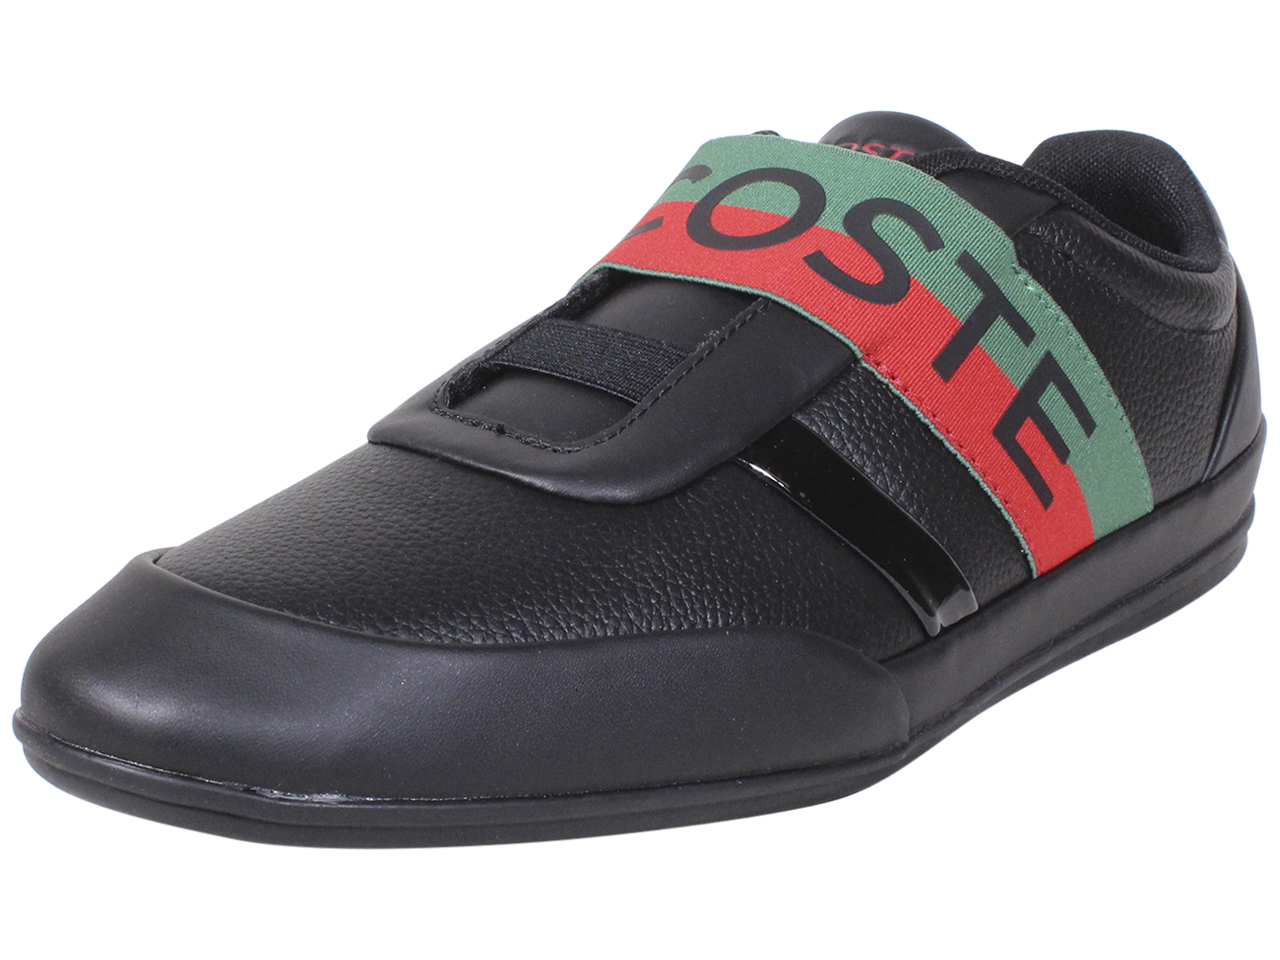 Lacoste Misano-Elastic-318 Sneakers Men's Low Top Shoes